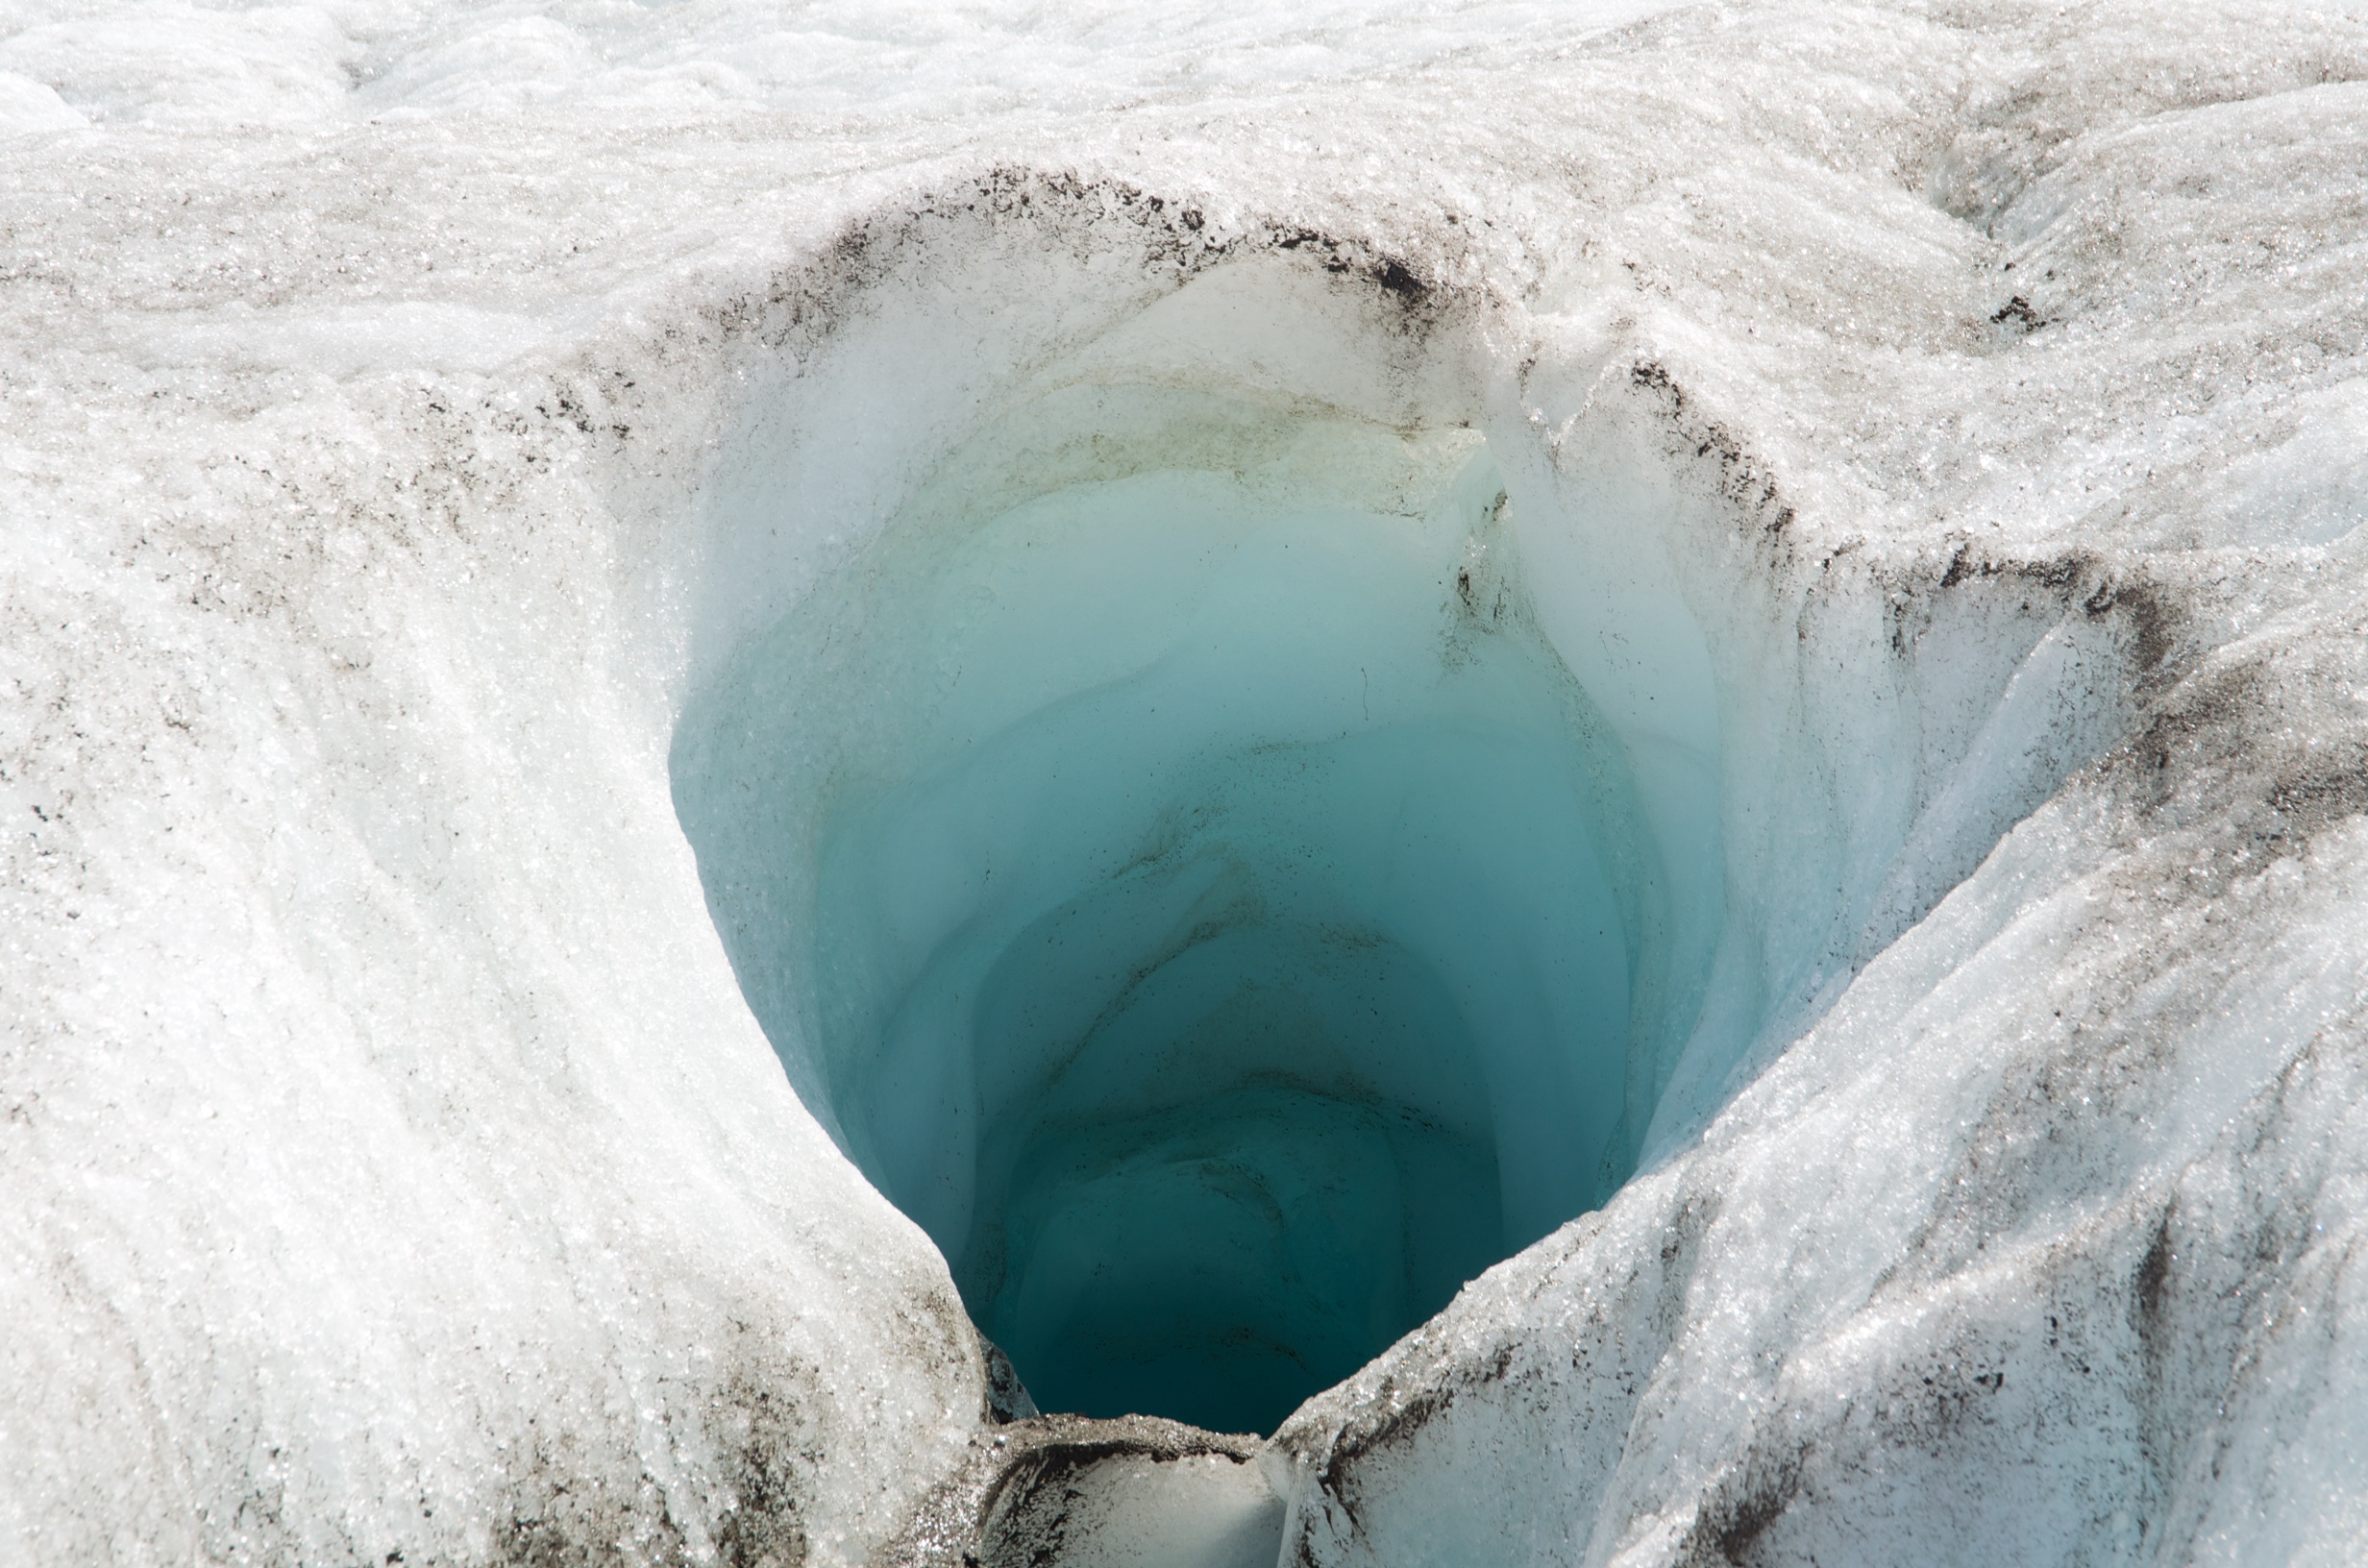  Wormhole (Moulin), Root Glacier, Kennicott, Alaska 